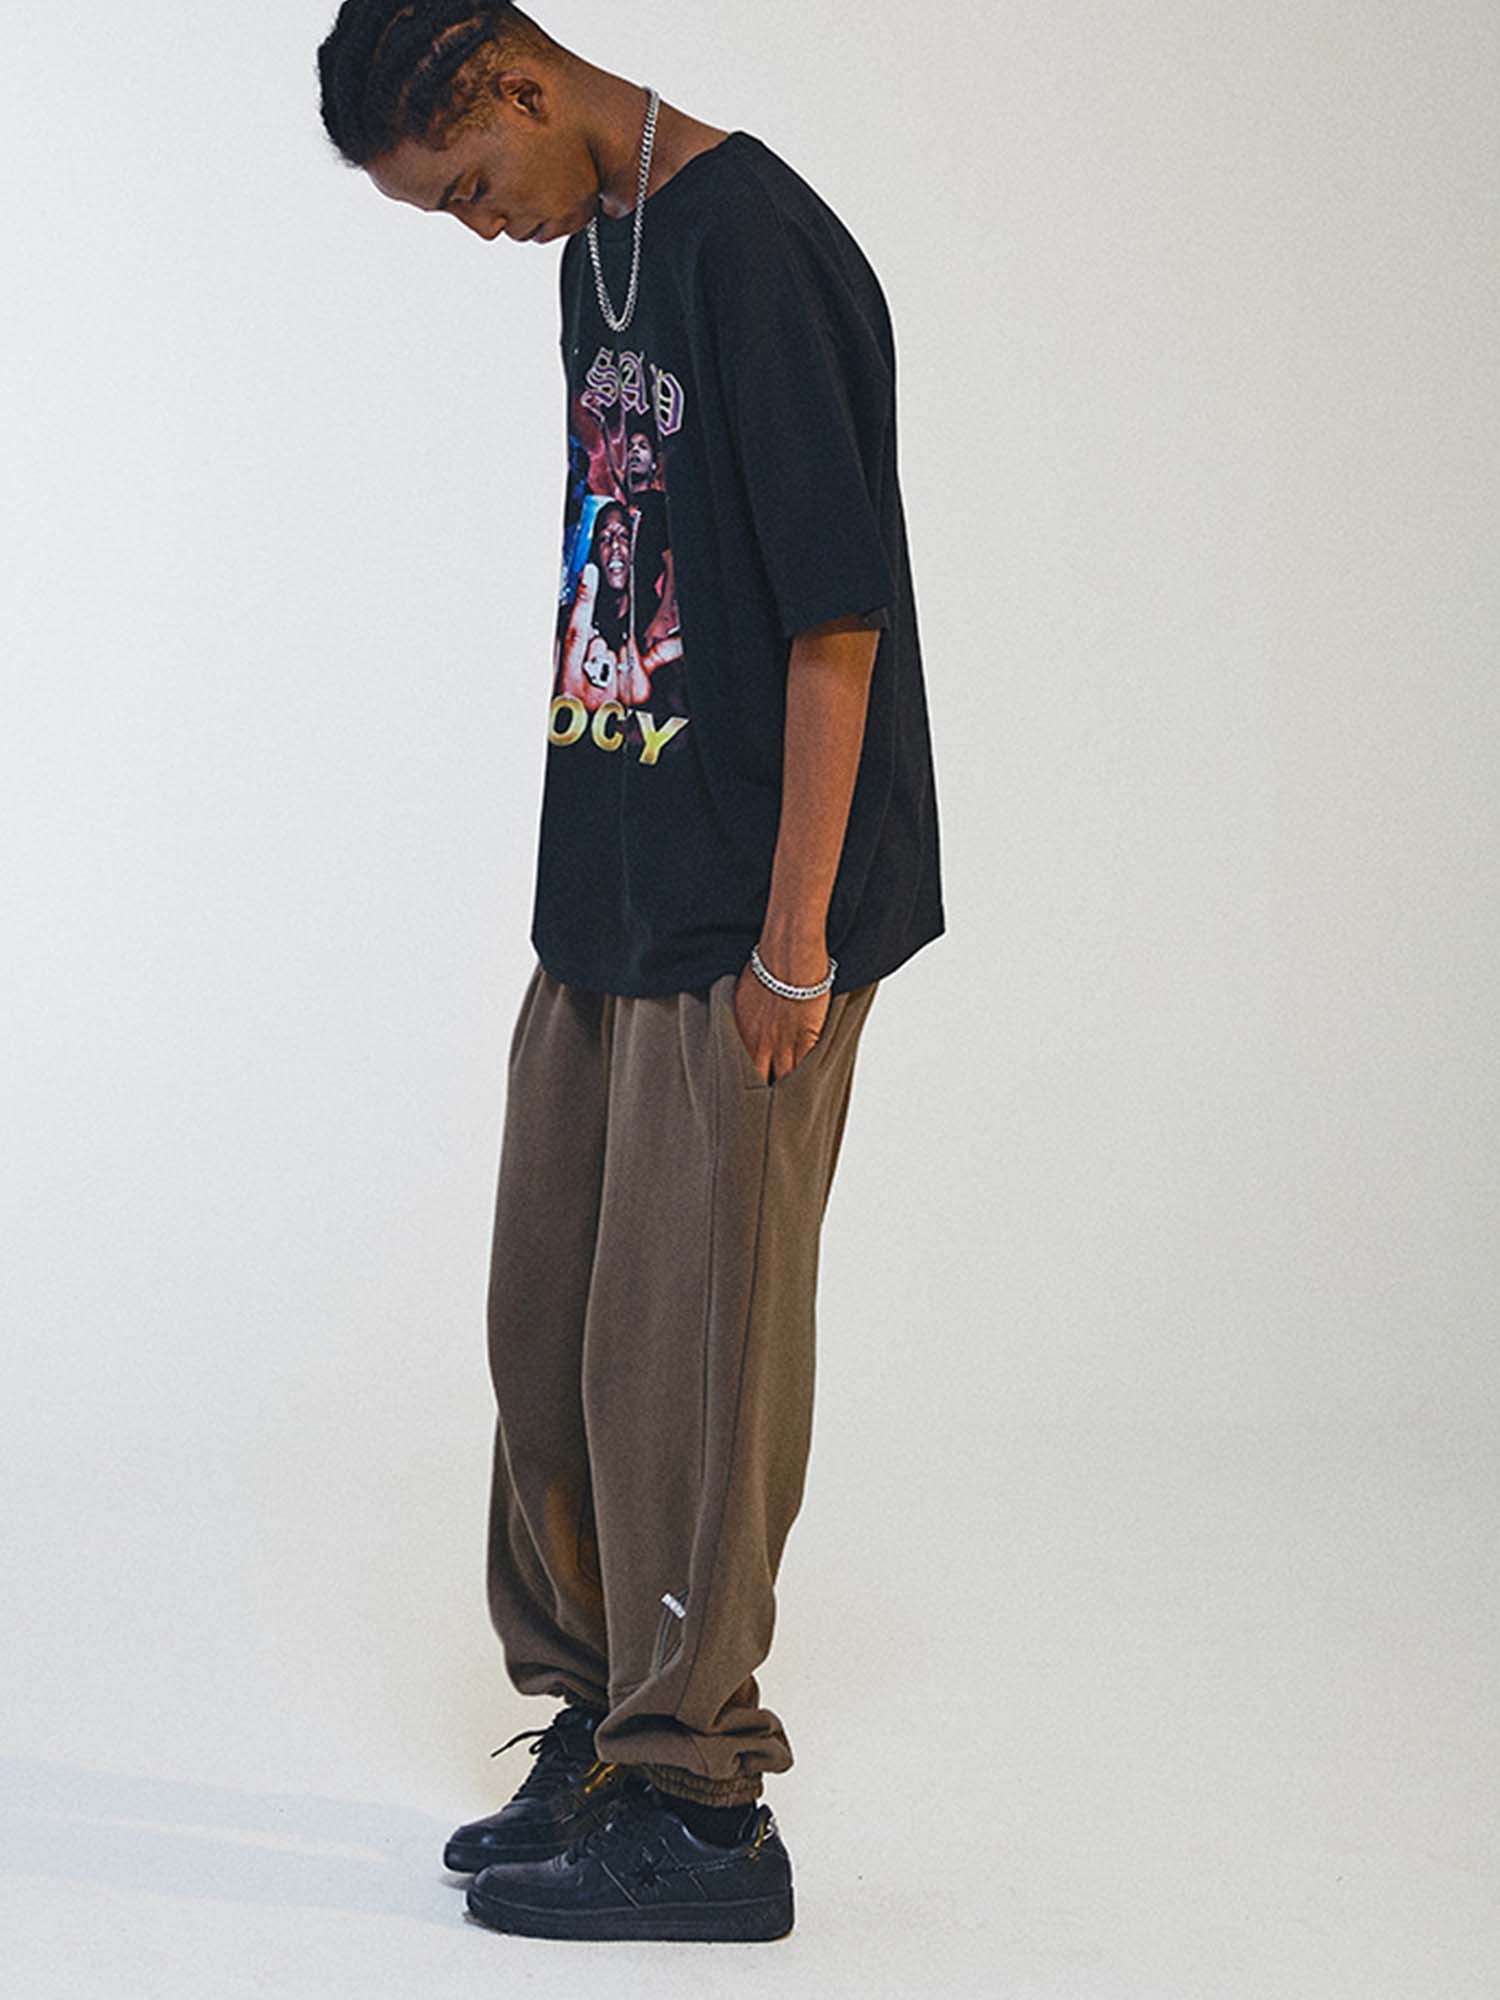 Justnotag HipHop Rock Rap Print Kurzarm-T-Shirt aus Baumwolle